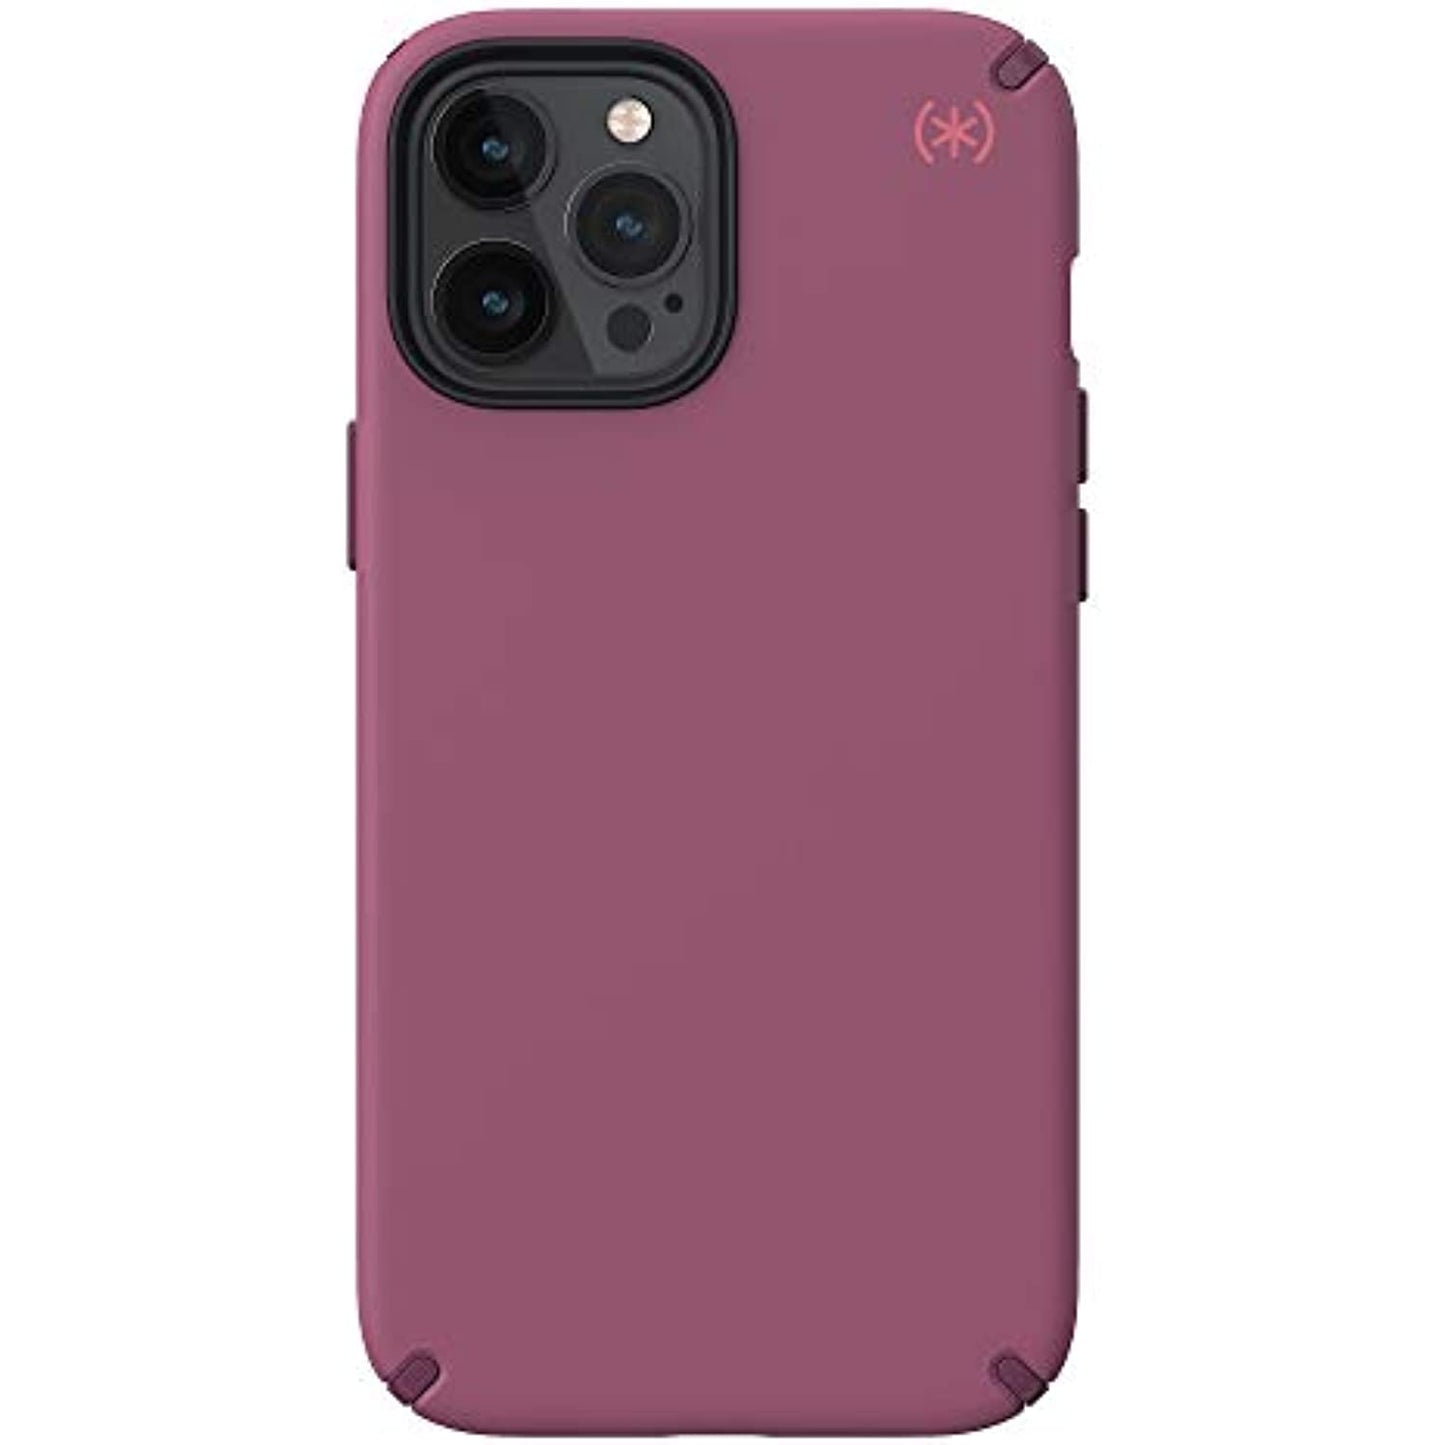 Speck Products Presidio2 PRO iPhone 12 Pro Max Case, Lush Burgundy/Azalea Burgundy/Royal Pink